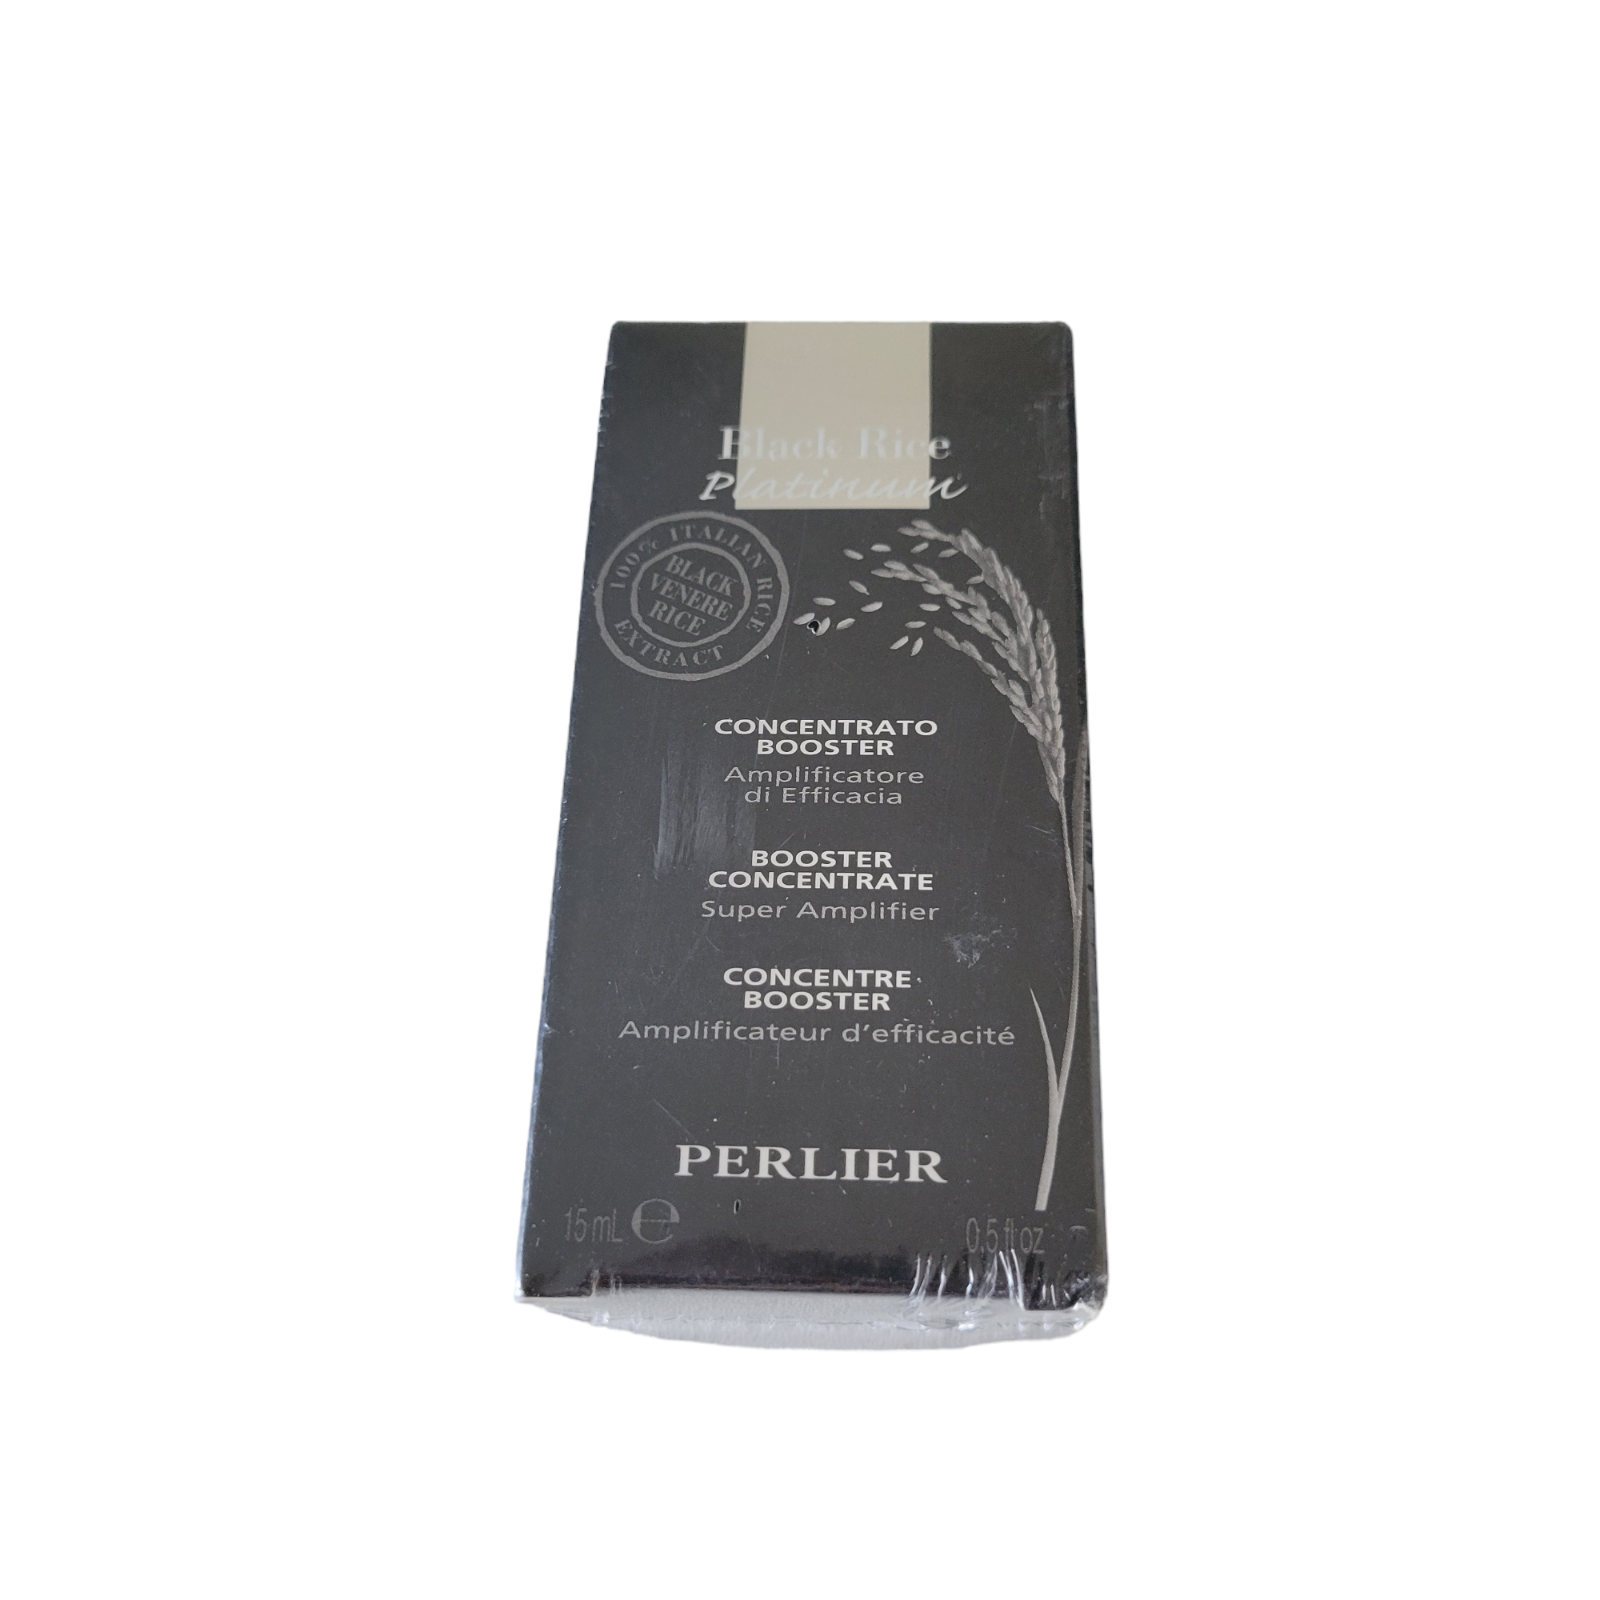 Primary image for PERLIER Black Rice Platinum Booster Concentrate Super Amplifier 0.5 oz Sealed